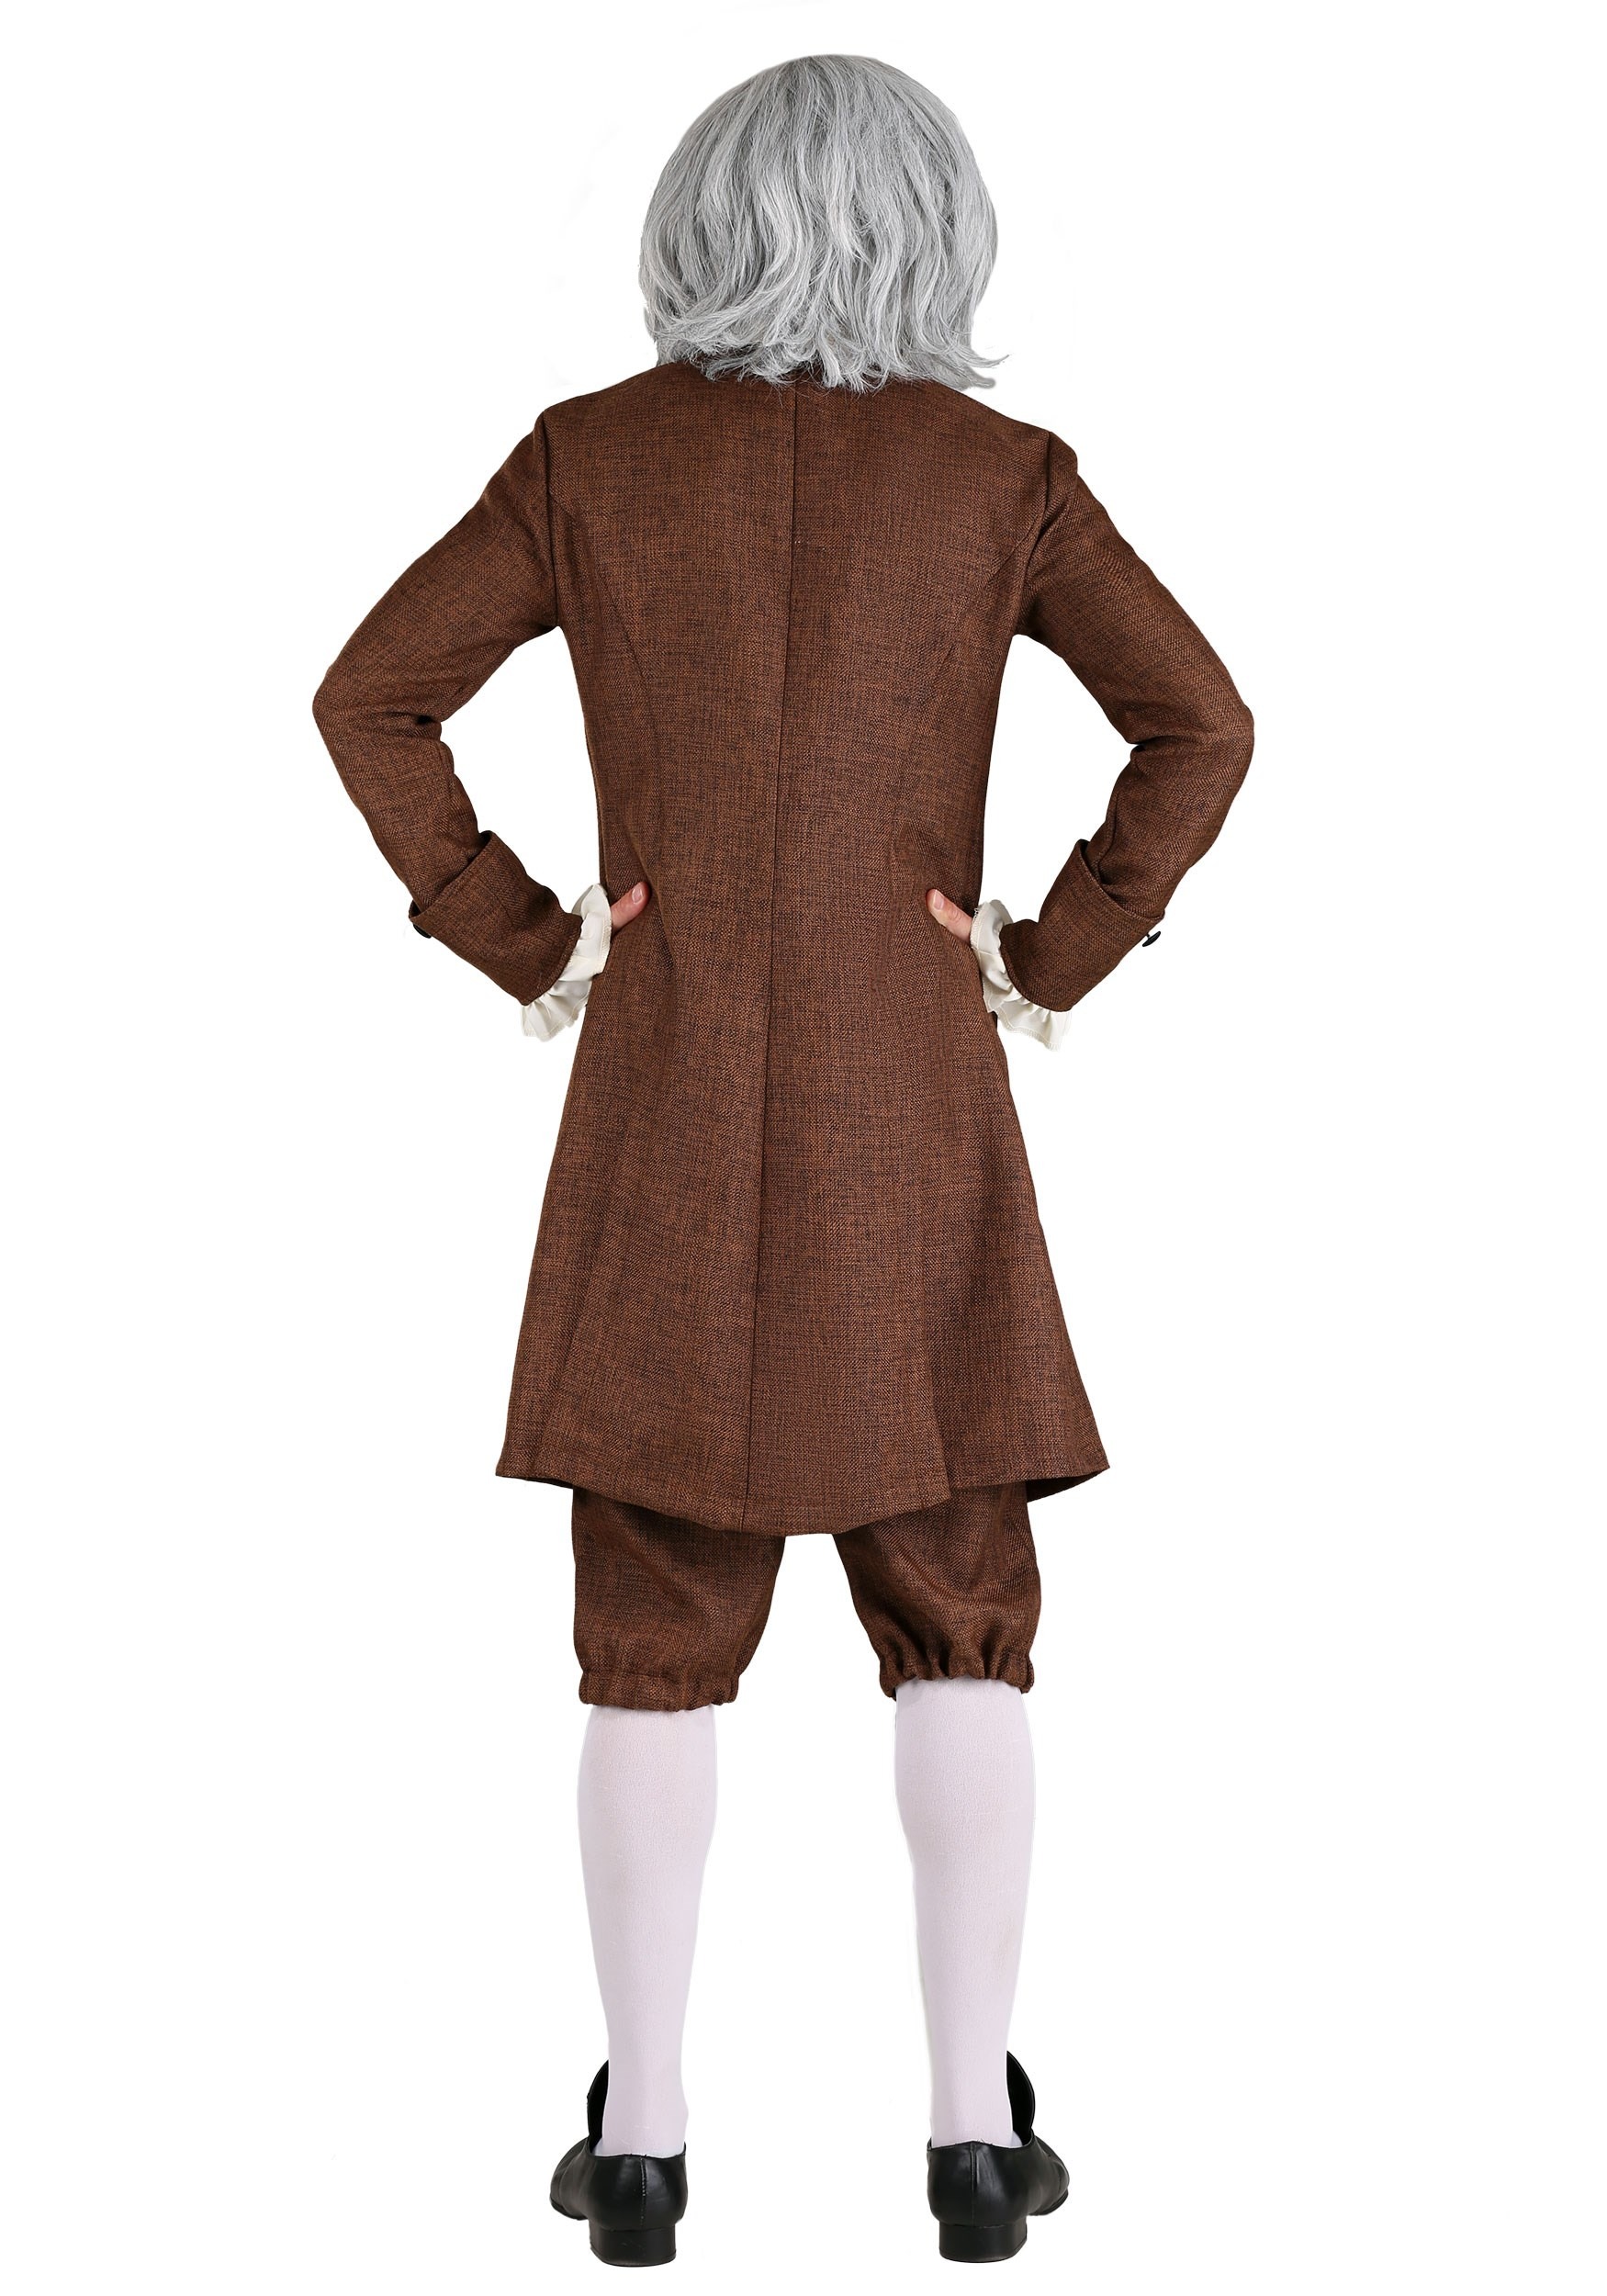 Colonial Benjamin Franklin Costume For Men